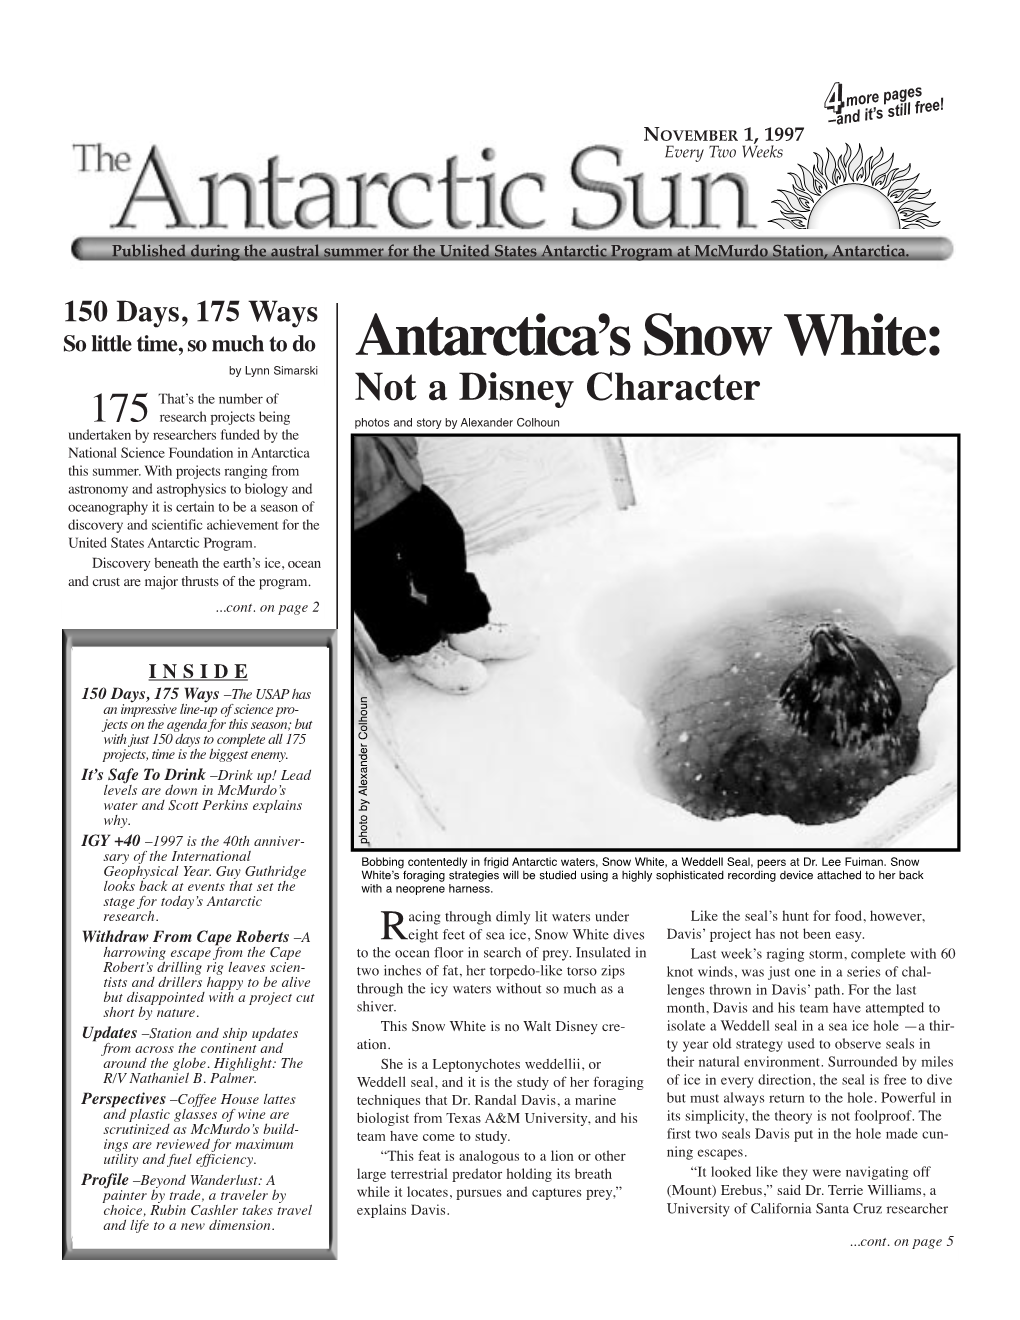 The Antarctic Sun, November 1, 1997